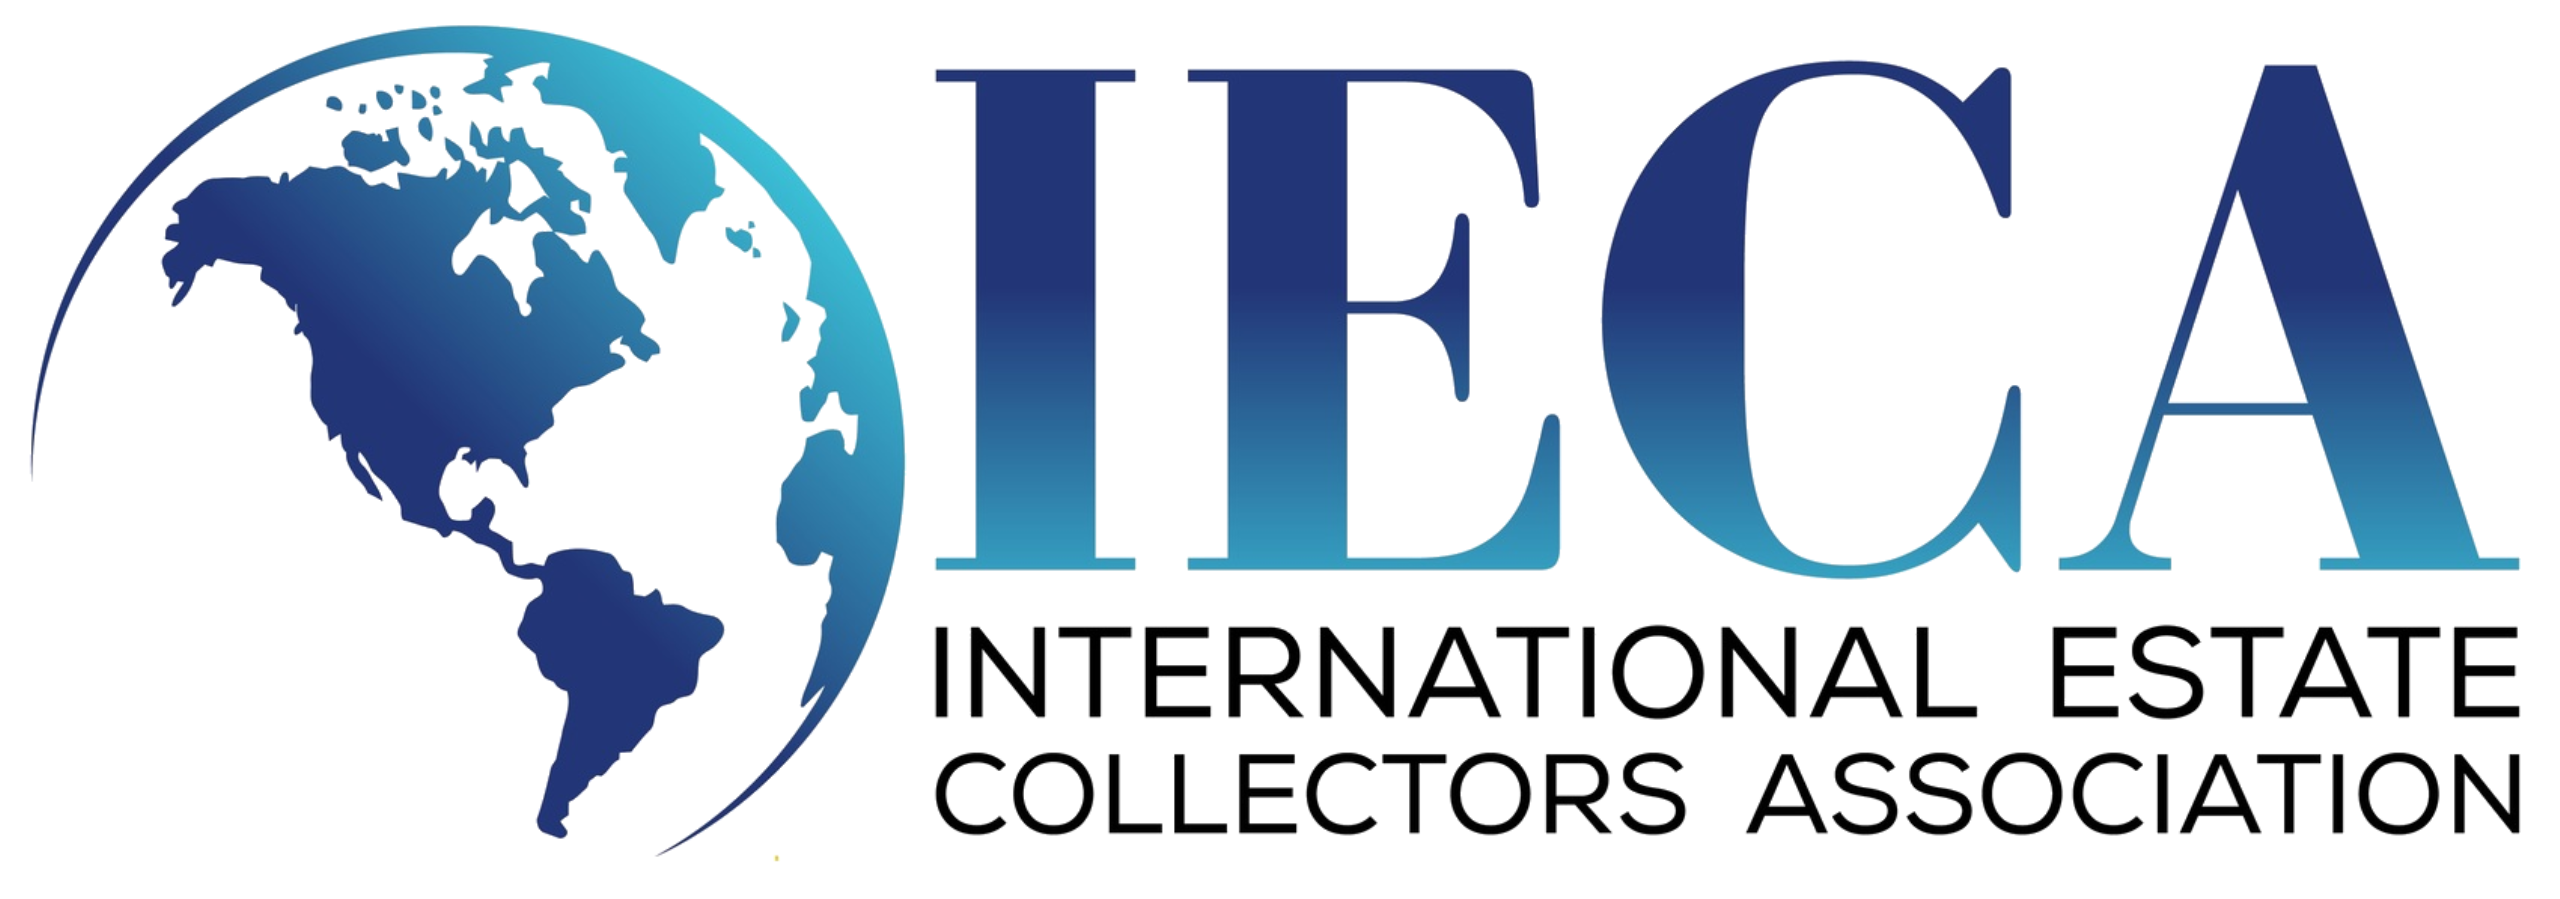 International Estate Collectors Association Logo